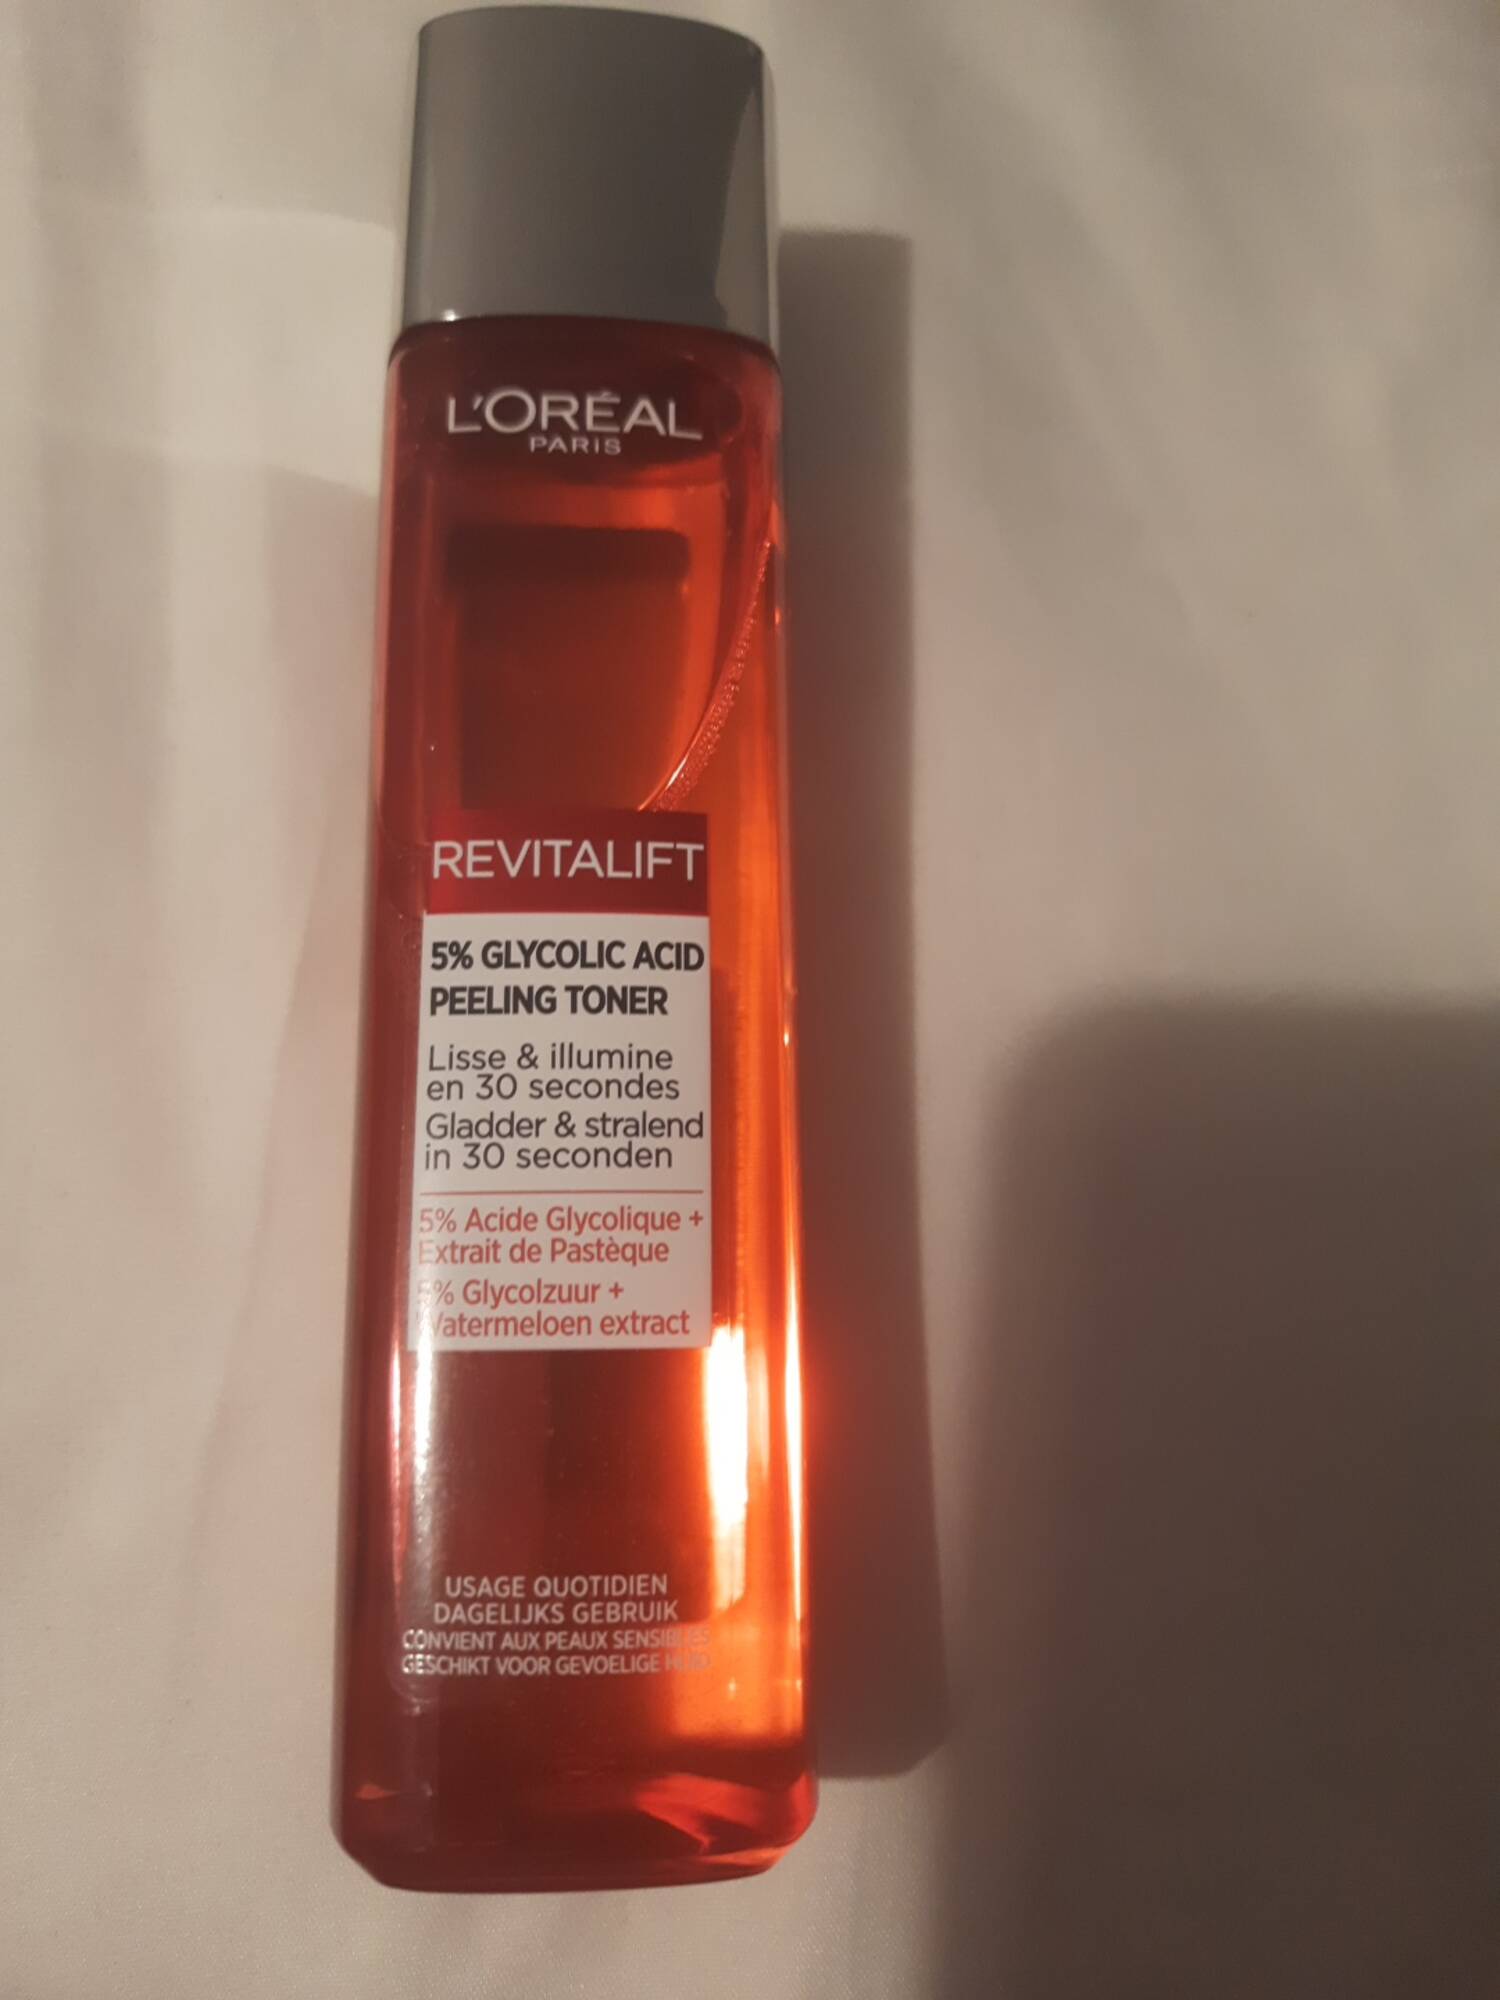 L'ORÉAL - Revitalift - 5% glycolic acid peeling toner